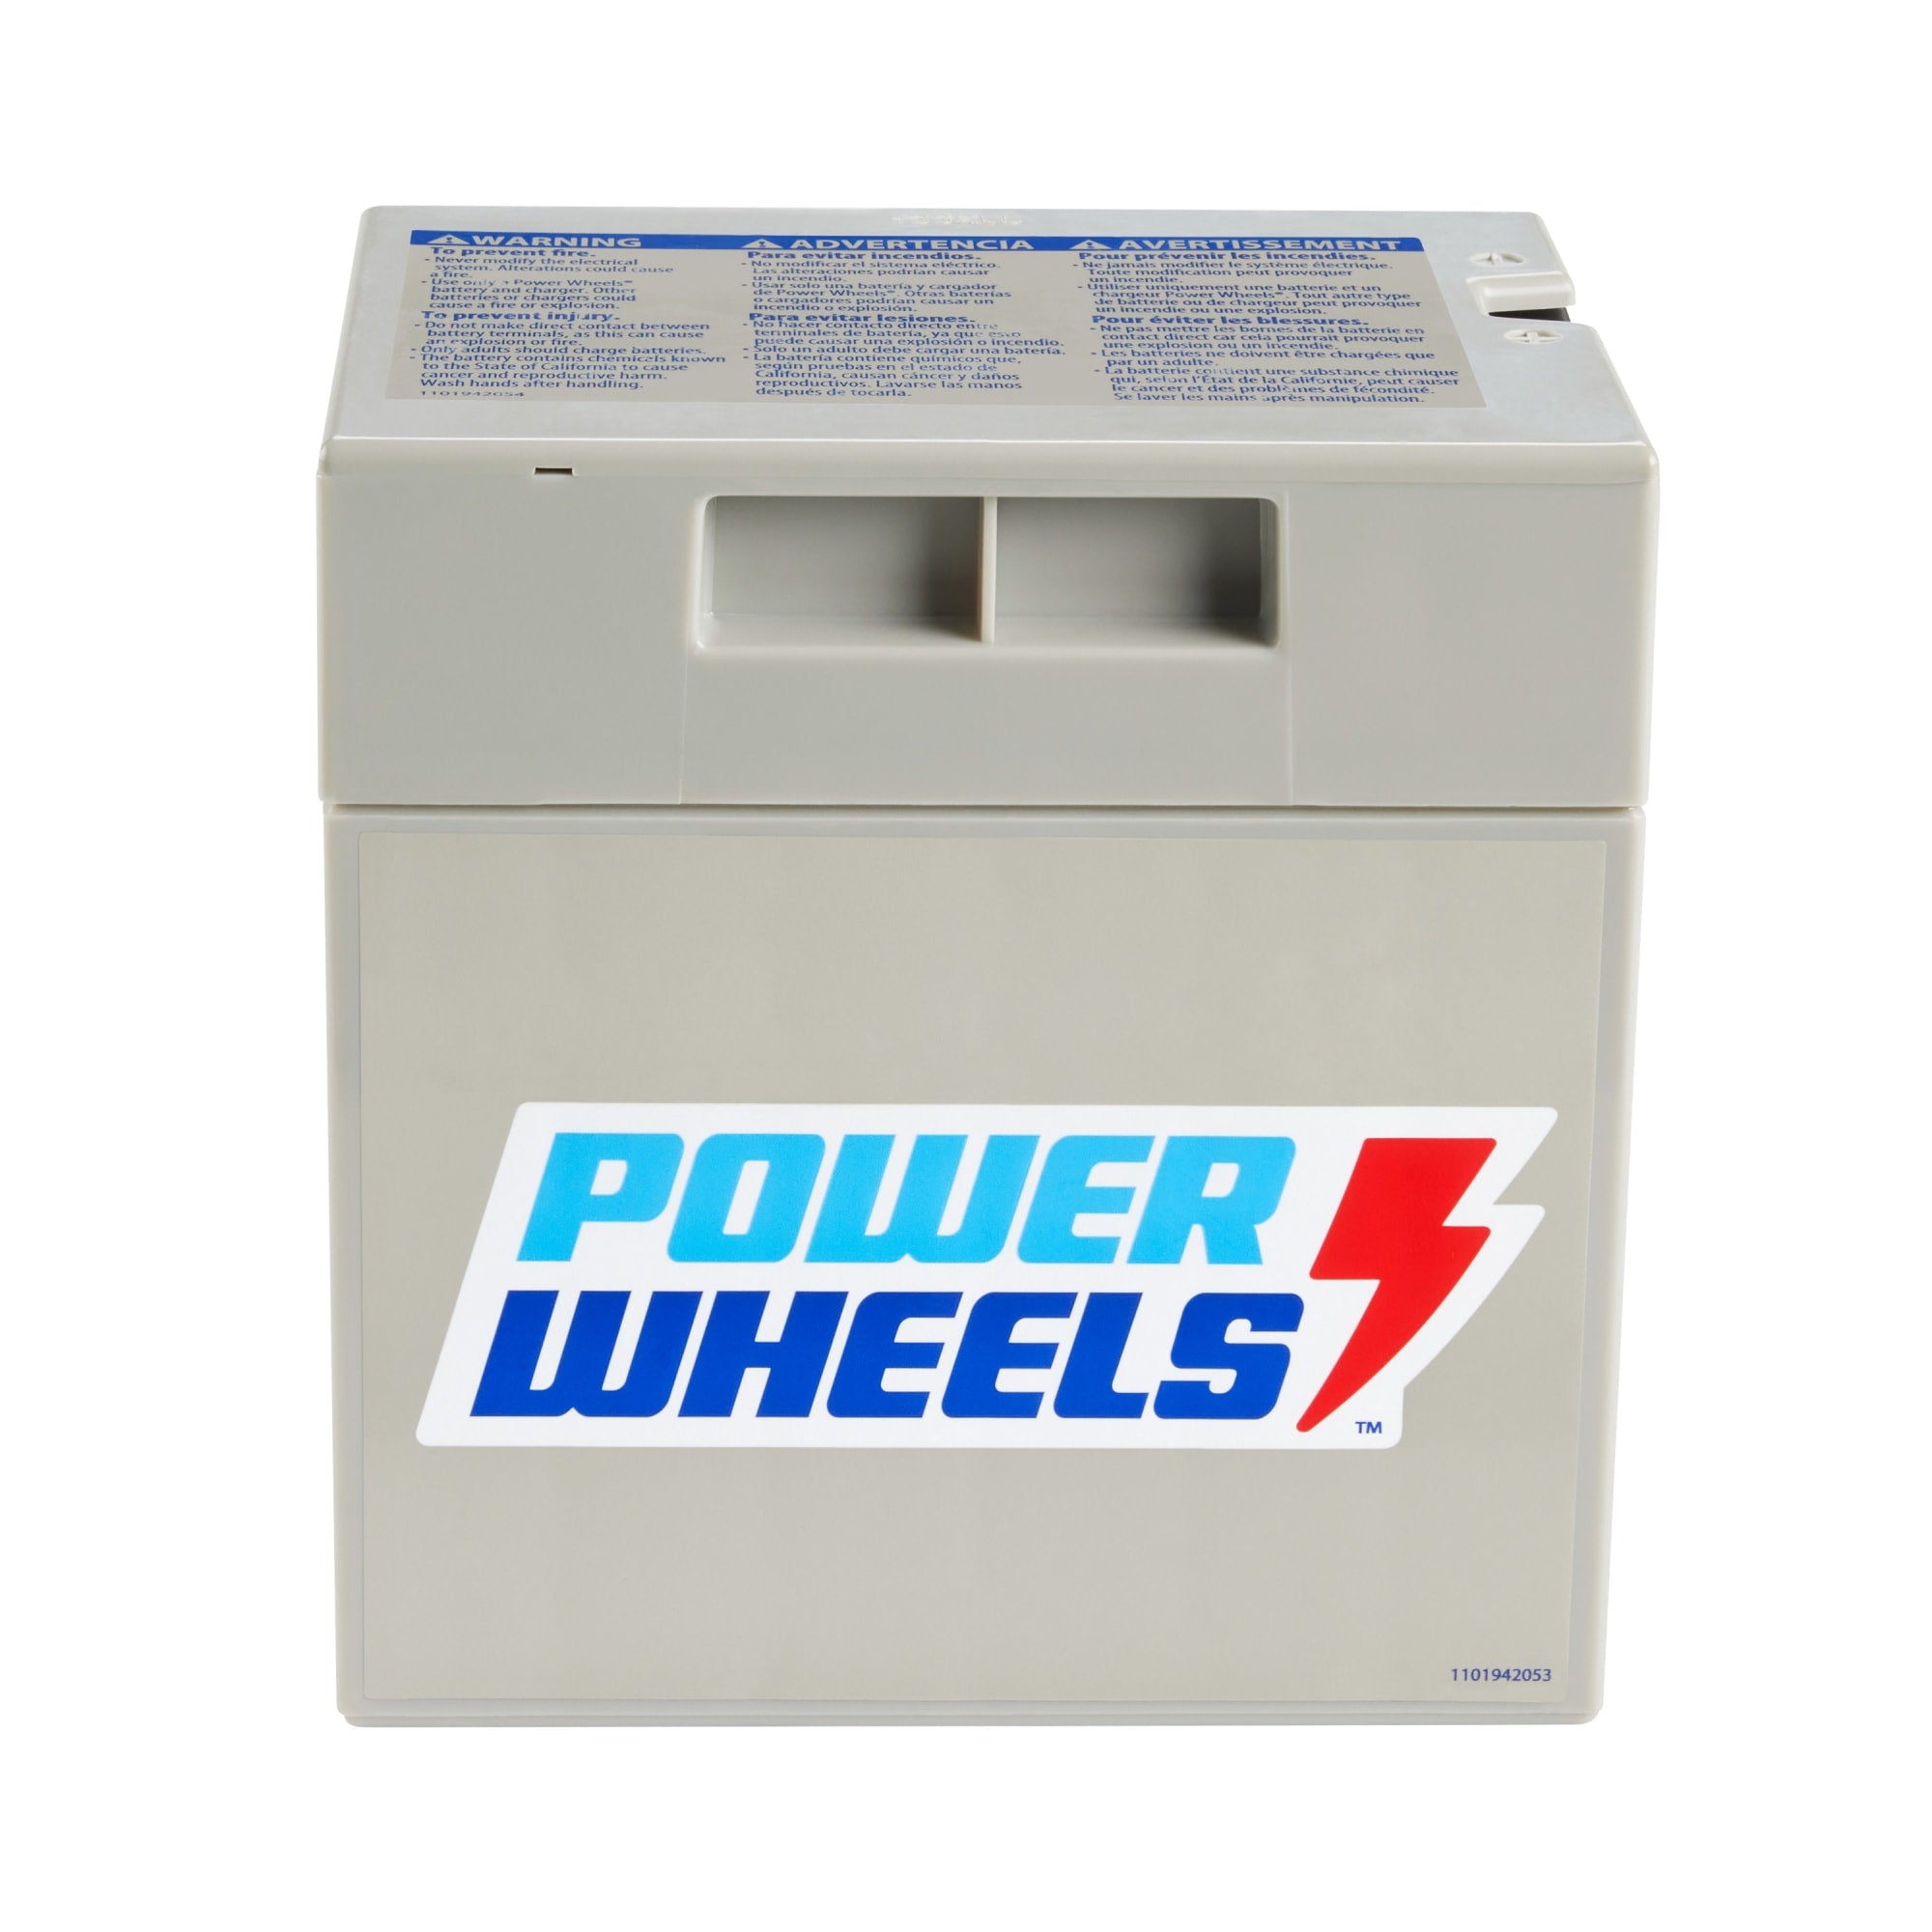 Power Wheels Power Wheels 12-Volt Rechargeable Battery